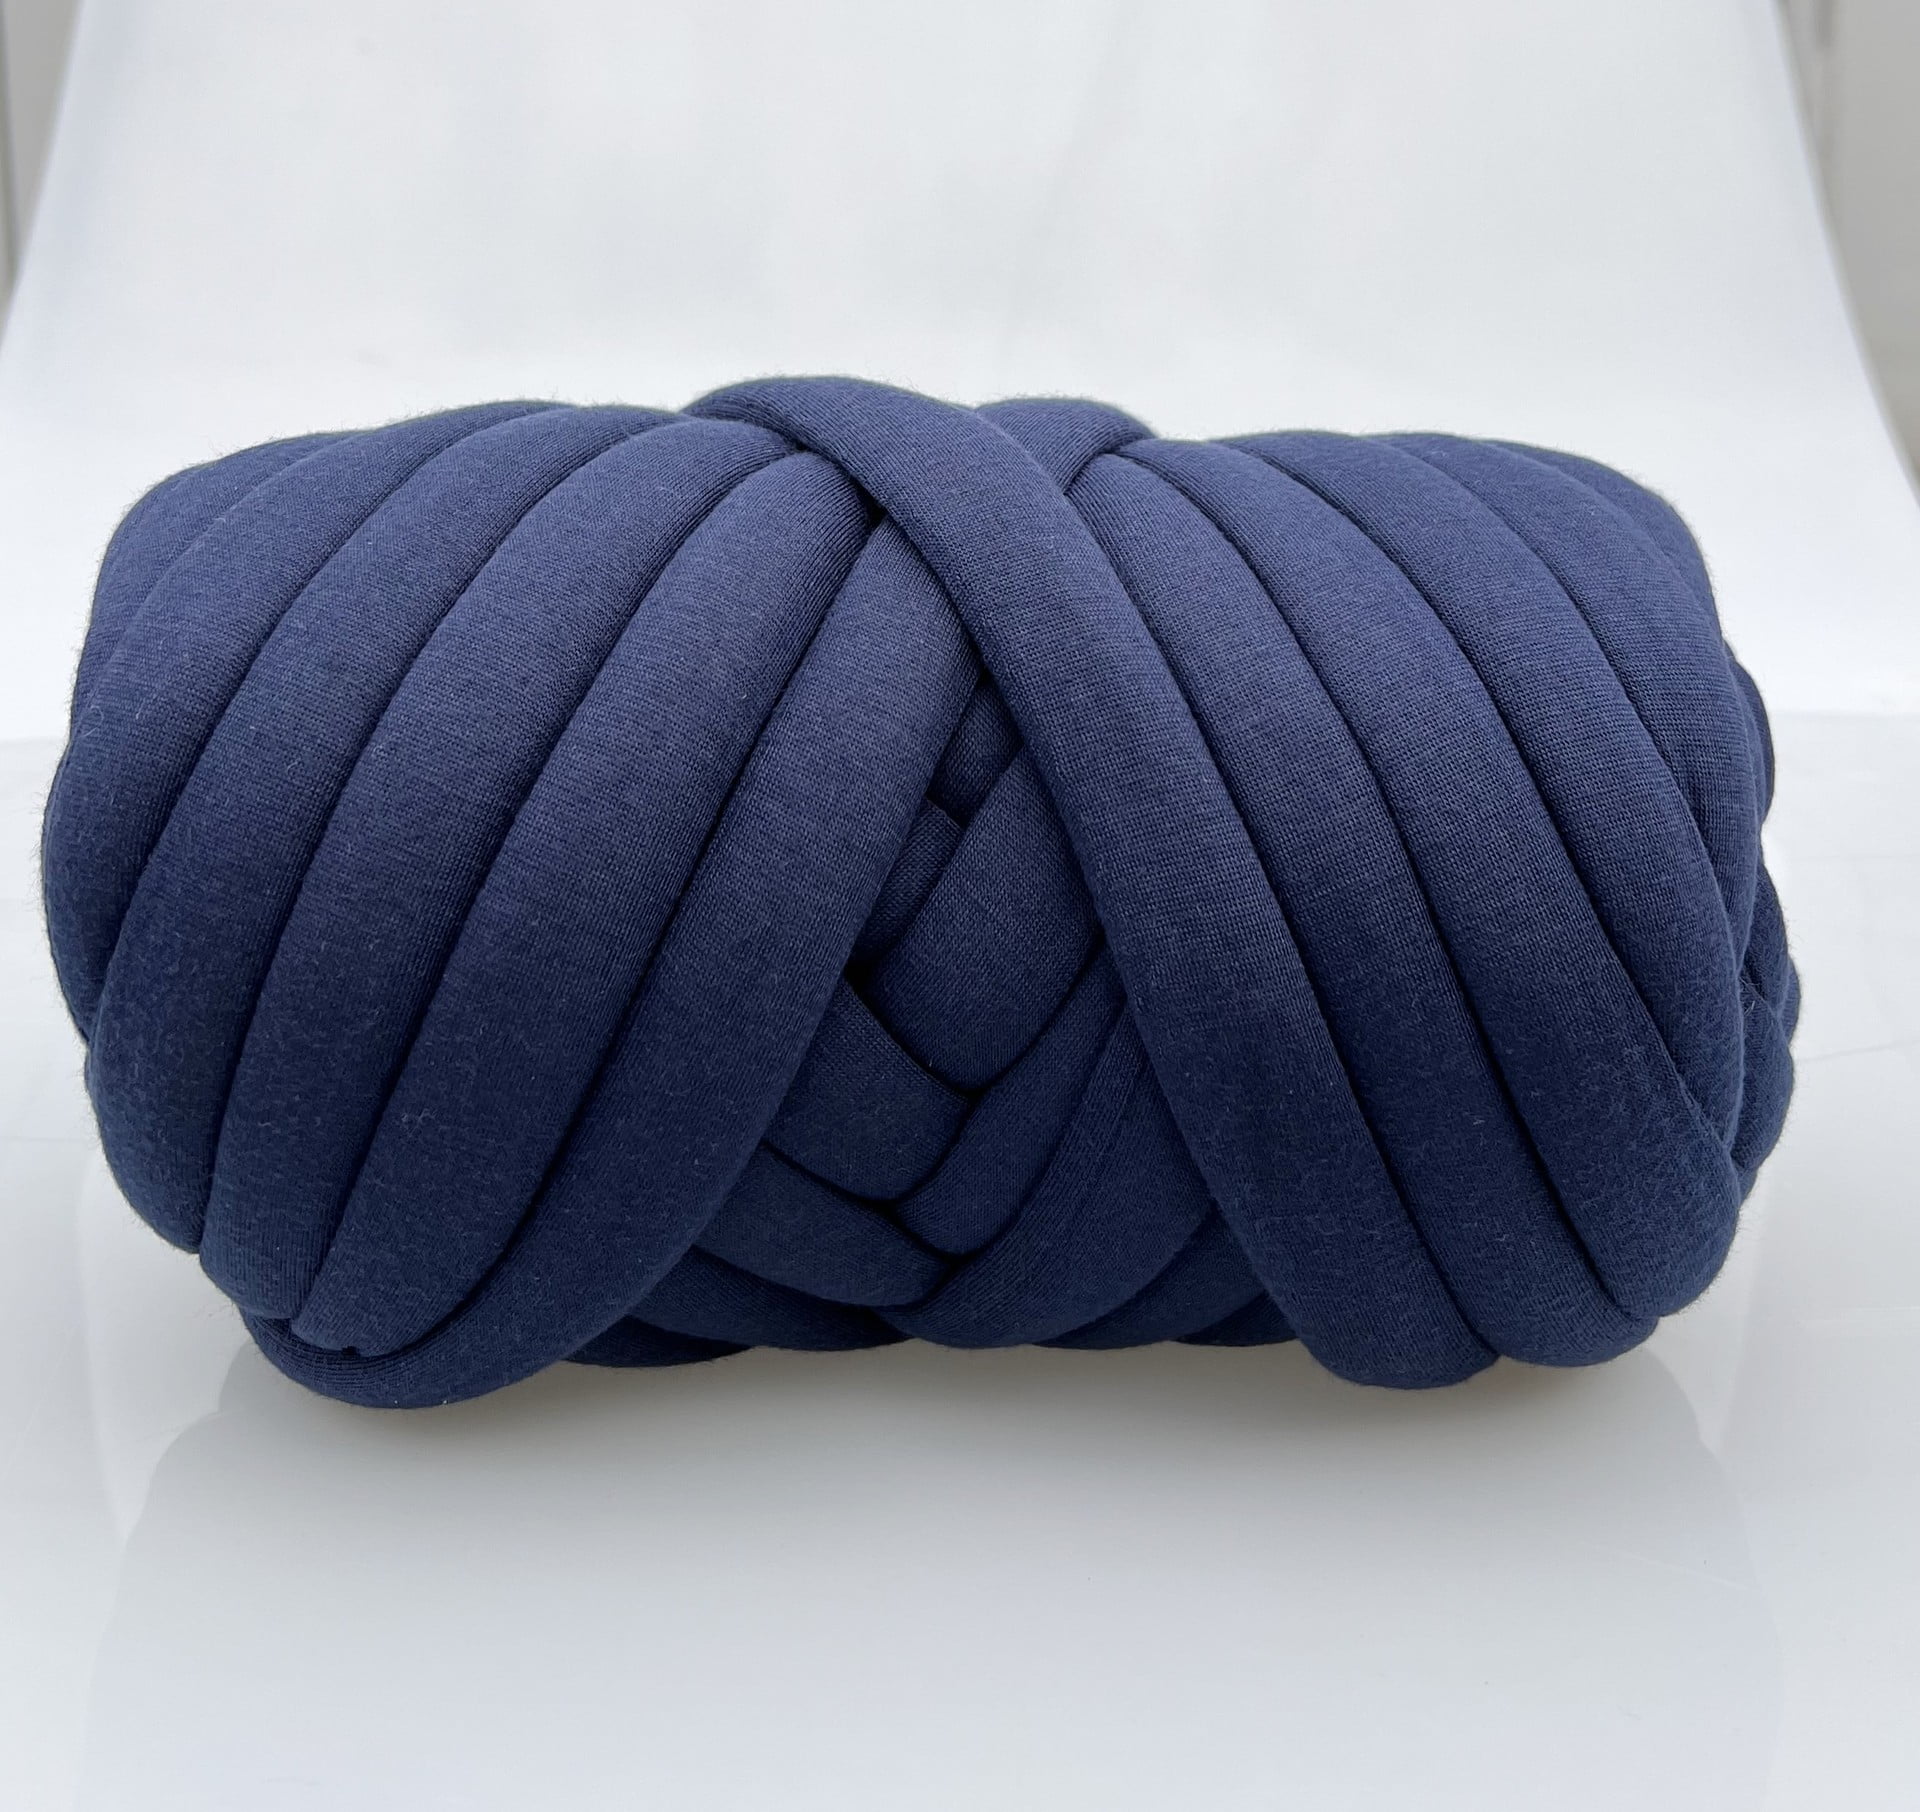 Giant Arm Knitting Chunky Yarn for Braided Knot Throw Blanket